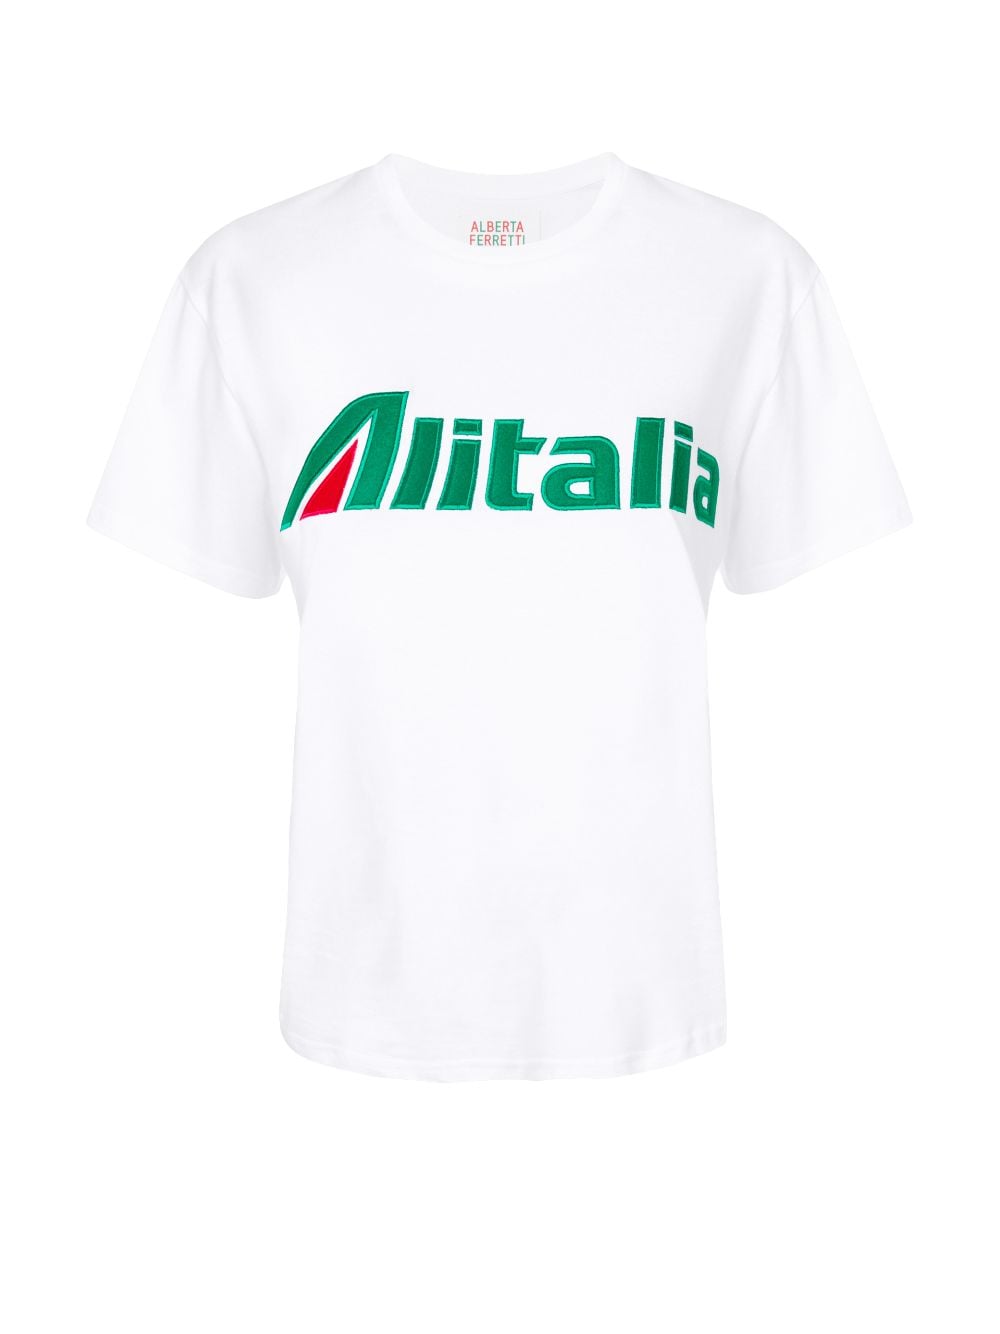 Alitalia patch T-shirt | Alberta Ferretti Eraldo.com